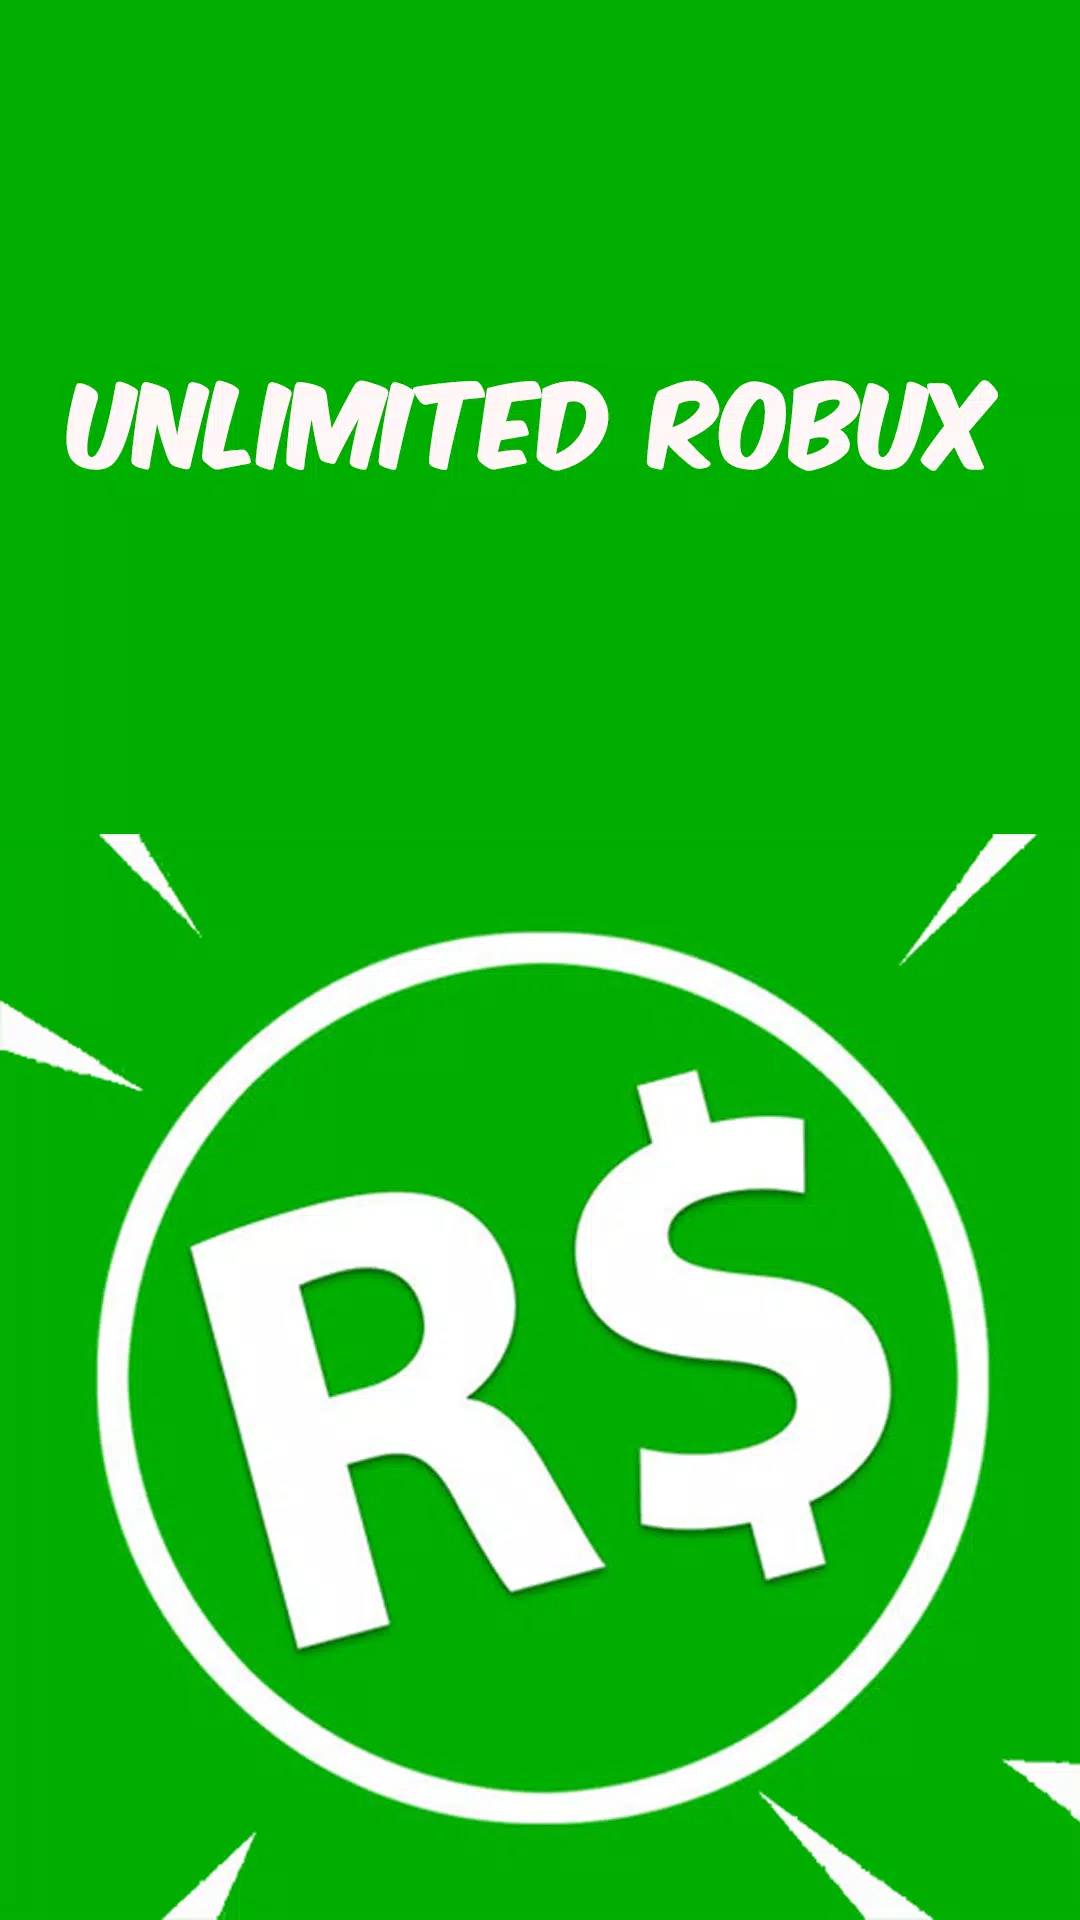 robux gratis - Roblox